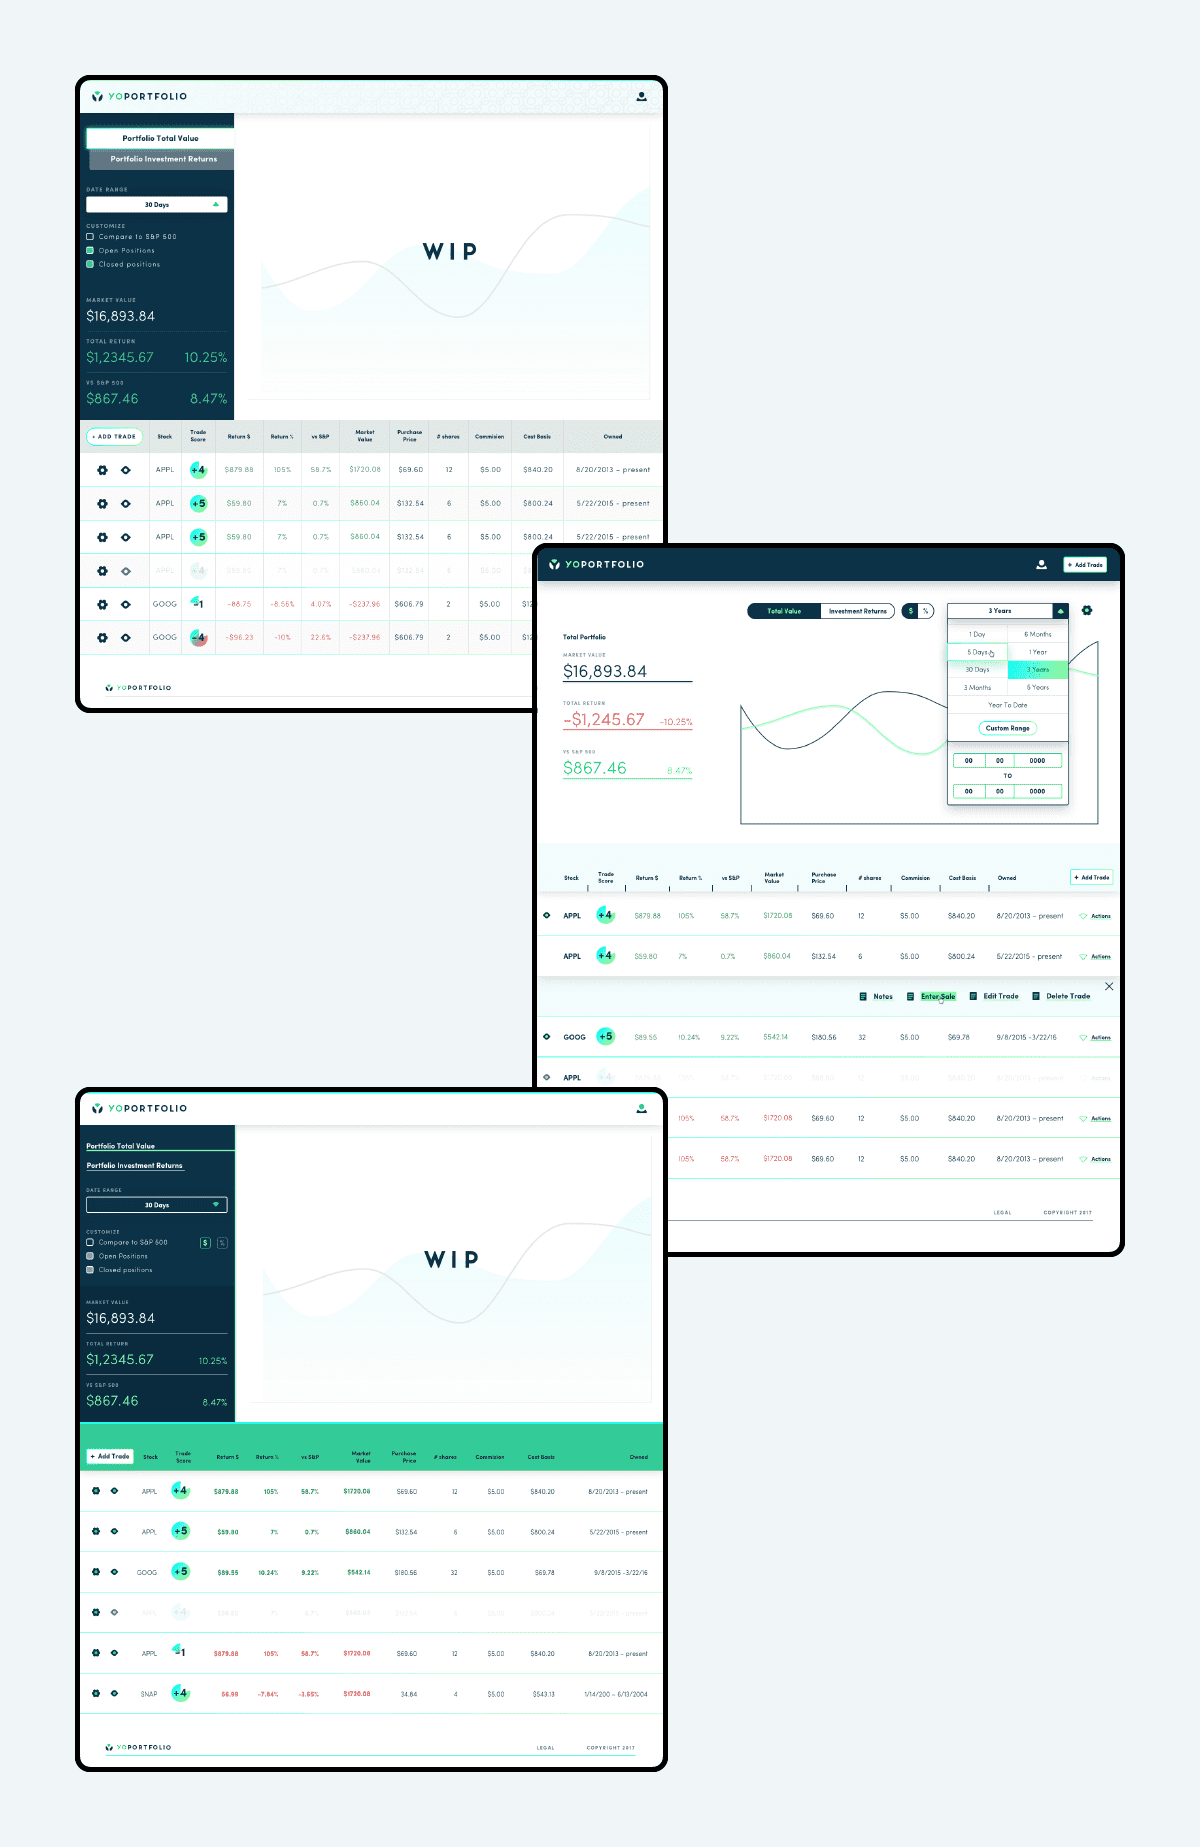 Screenshots of different screens in the YoPortfolio app.